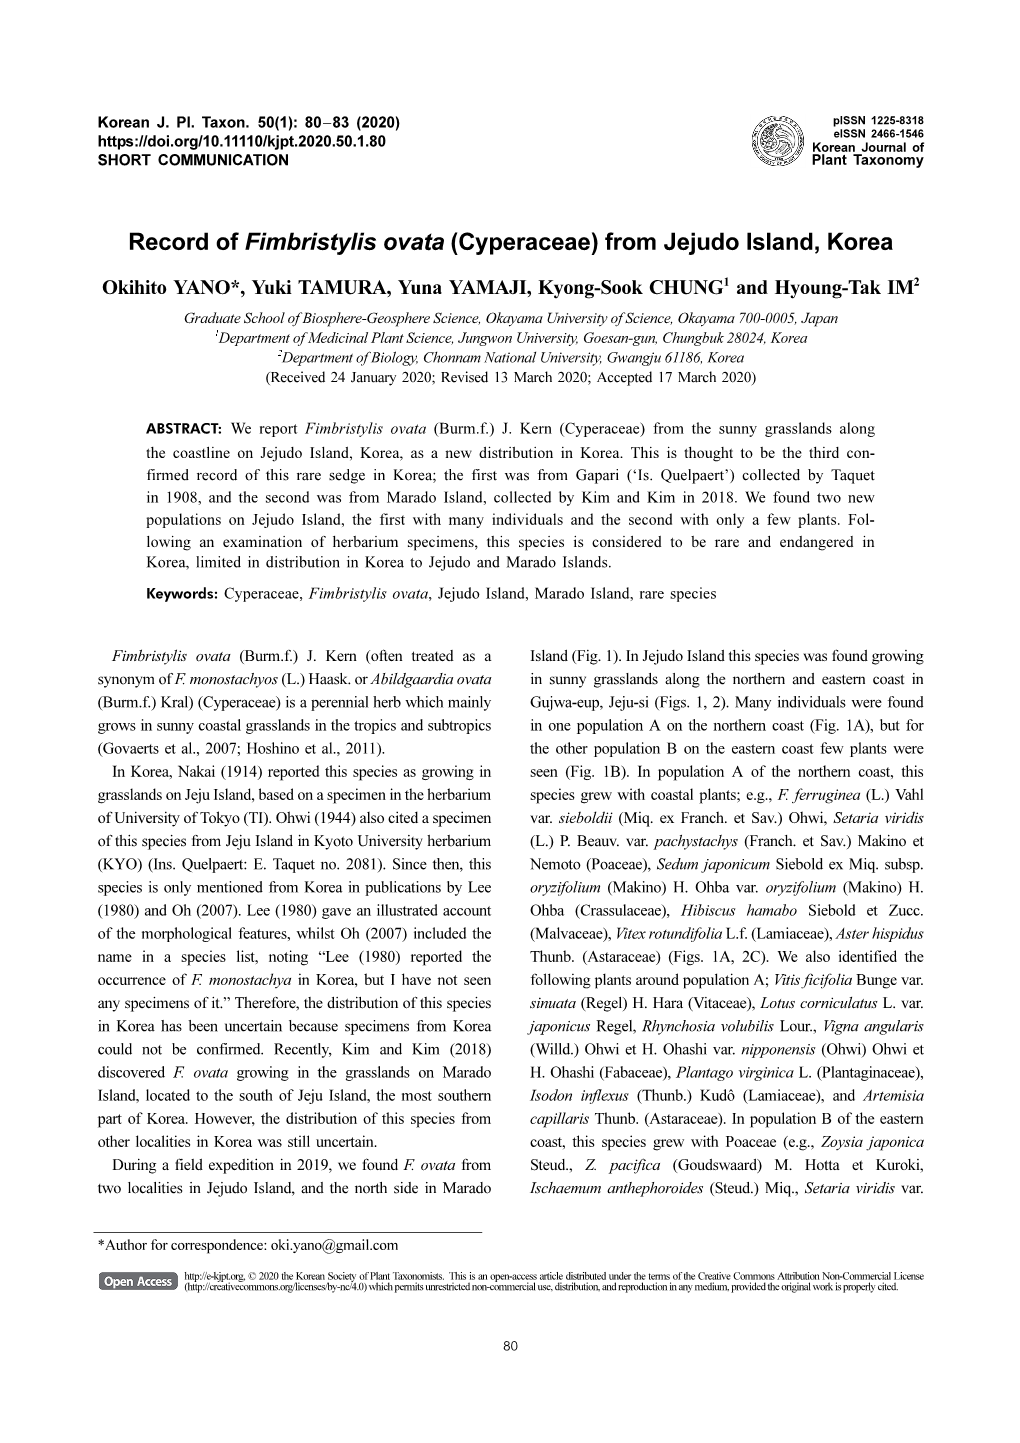 Record of Fimbristylis Ovata (Cyperaceae) from Jejudo Island, Korea